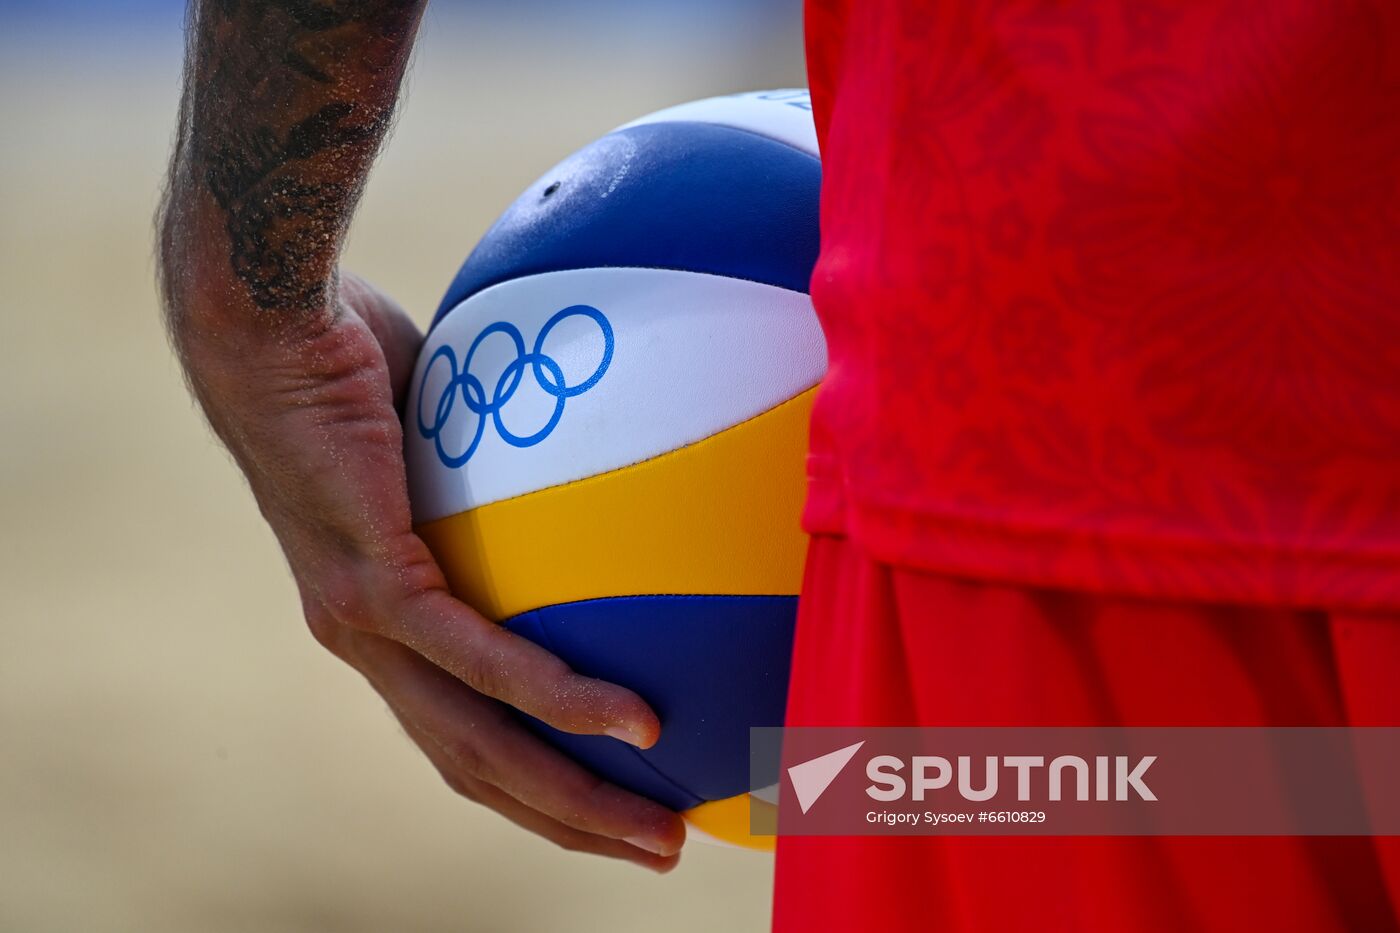 Japan Olympics 2020 Beach Volleyball Men Krasilnikov/Stoyanovskiy - Plavins/Tocs